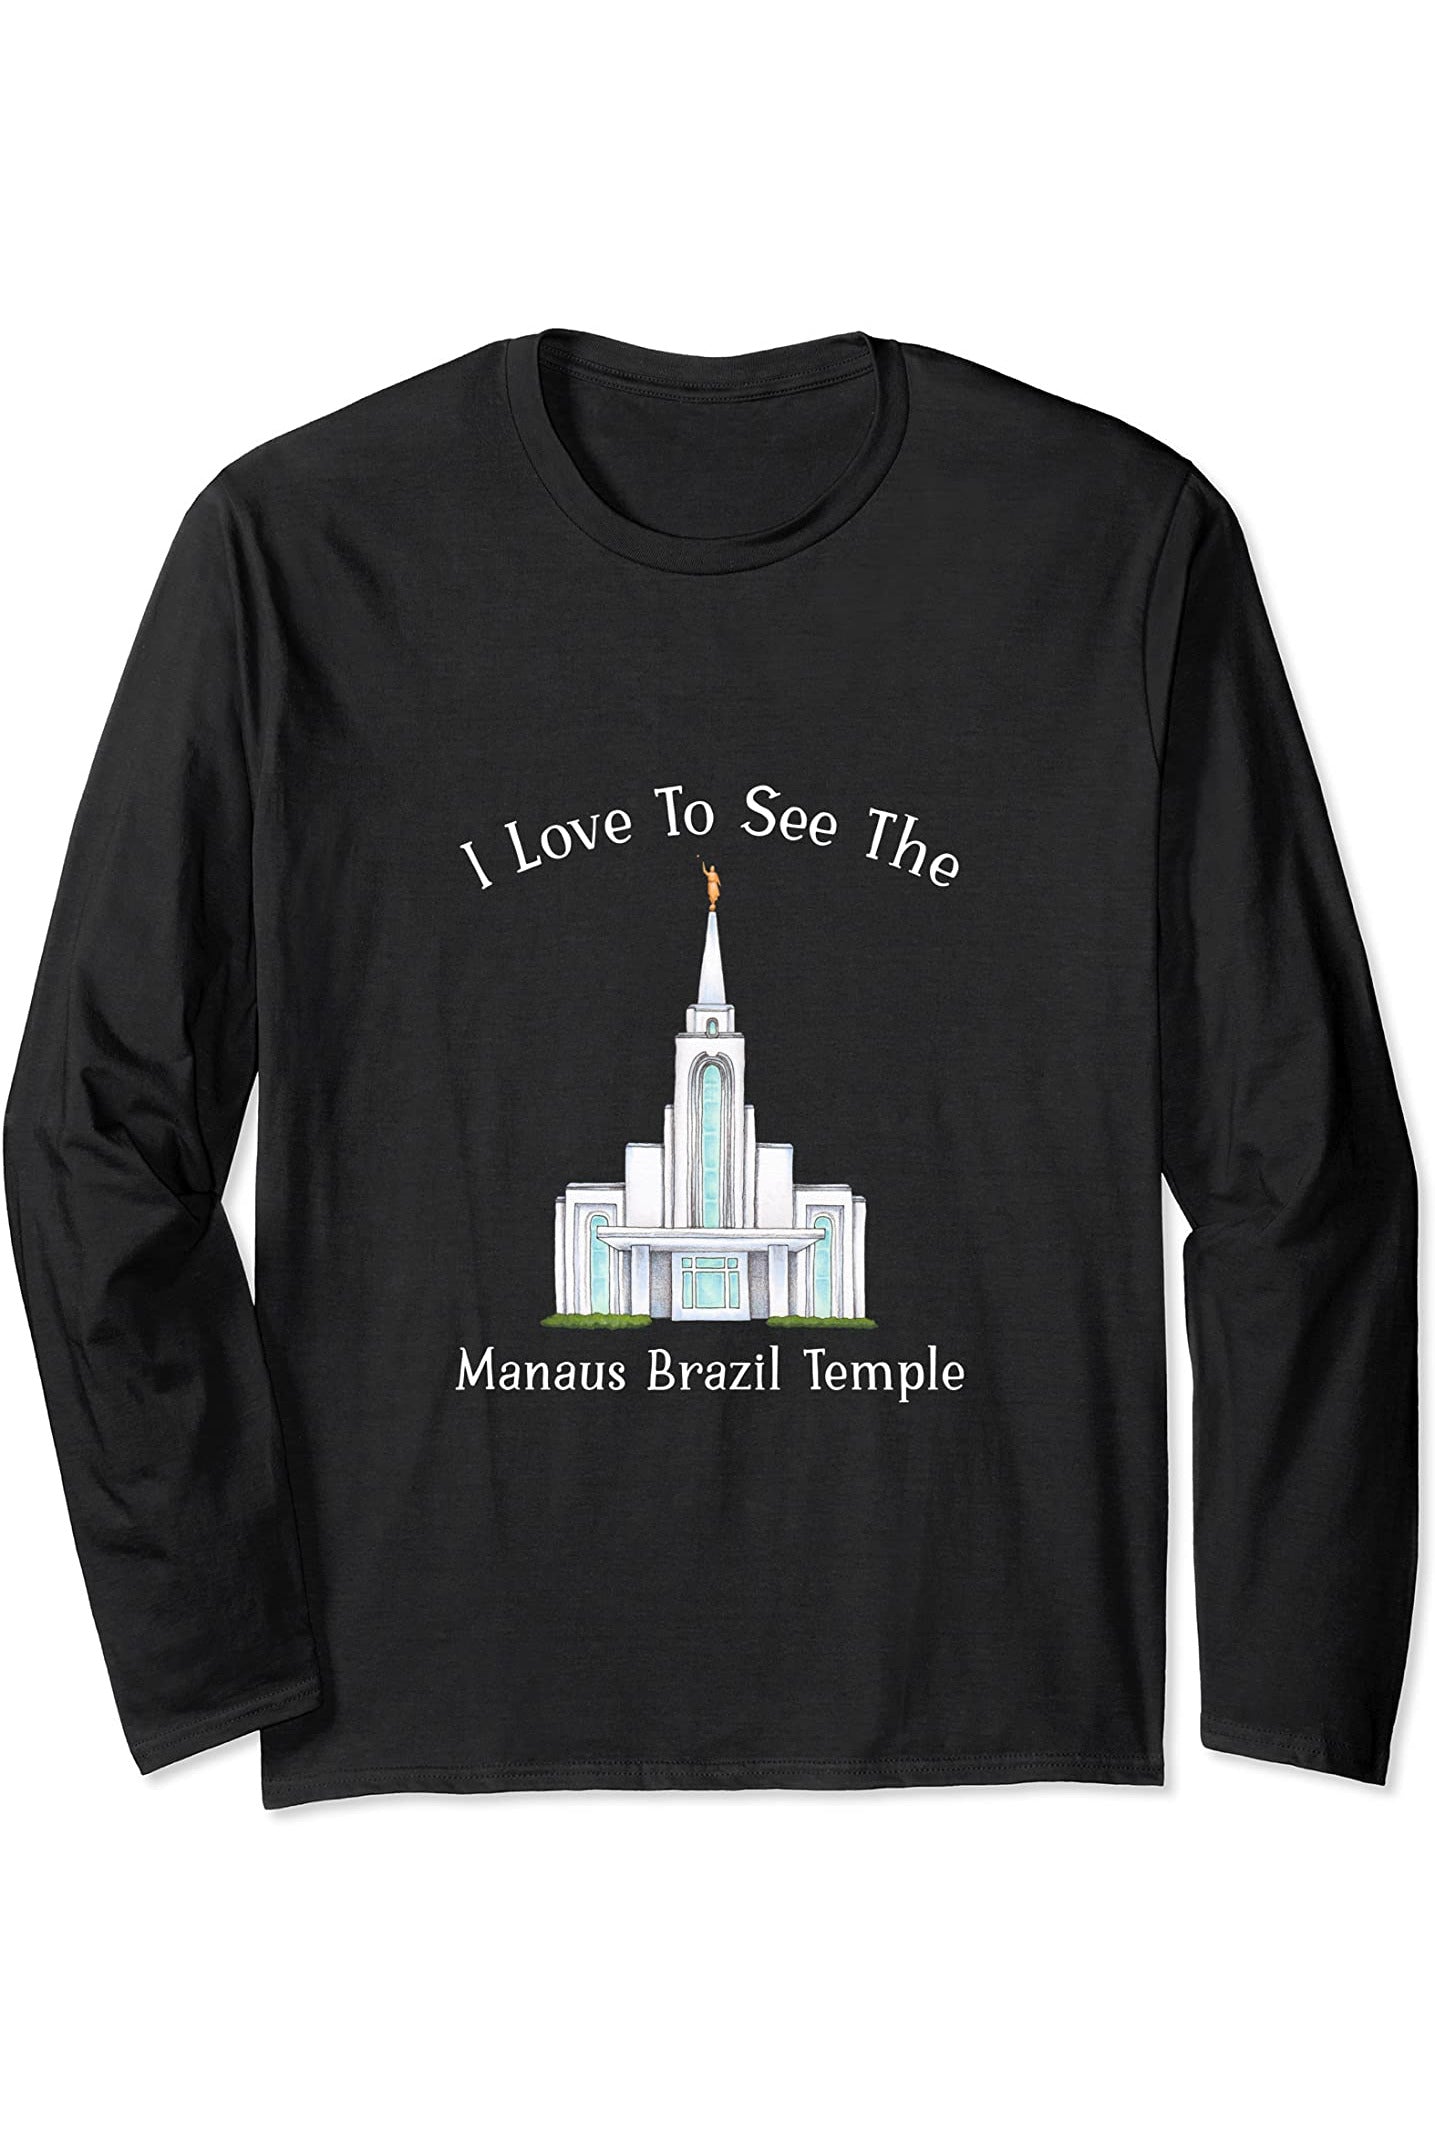 Manaus Brazil Temple Long Sleeve T-Shirt - Happy Style (English) US